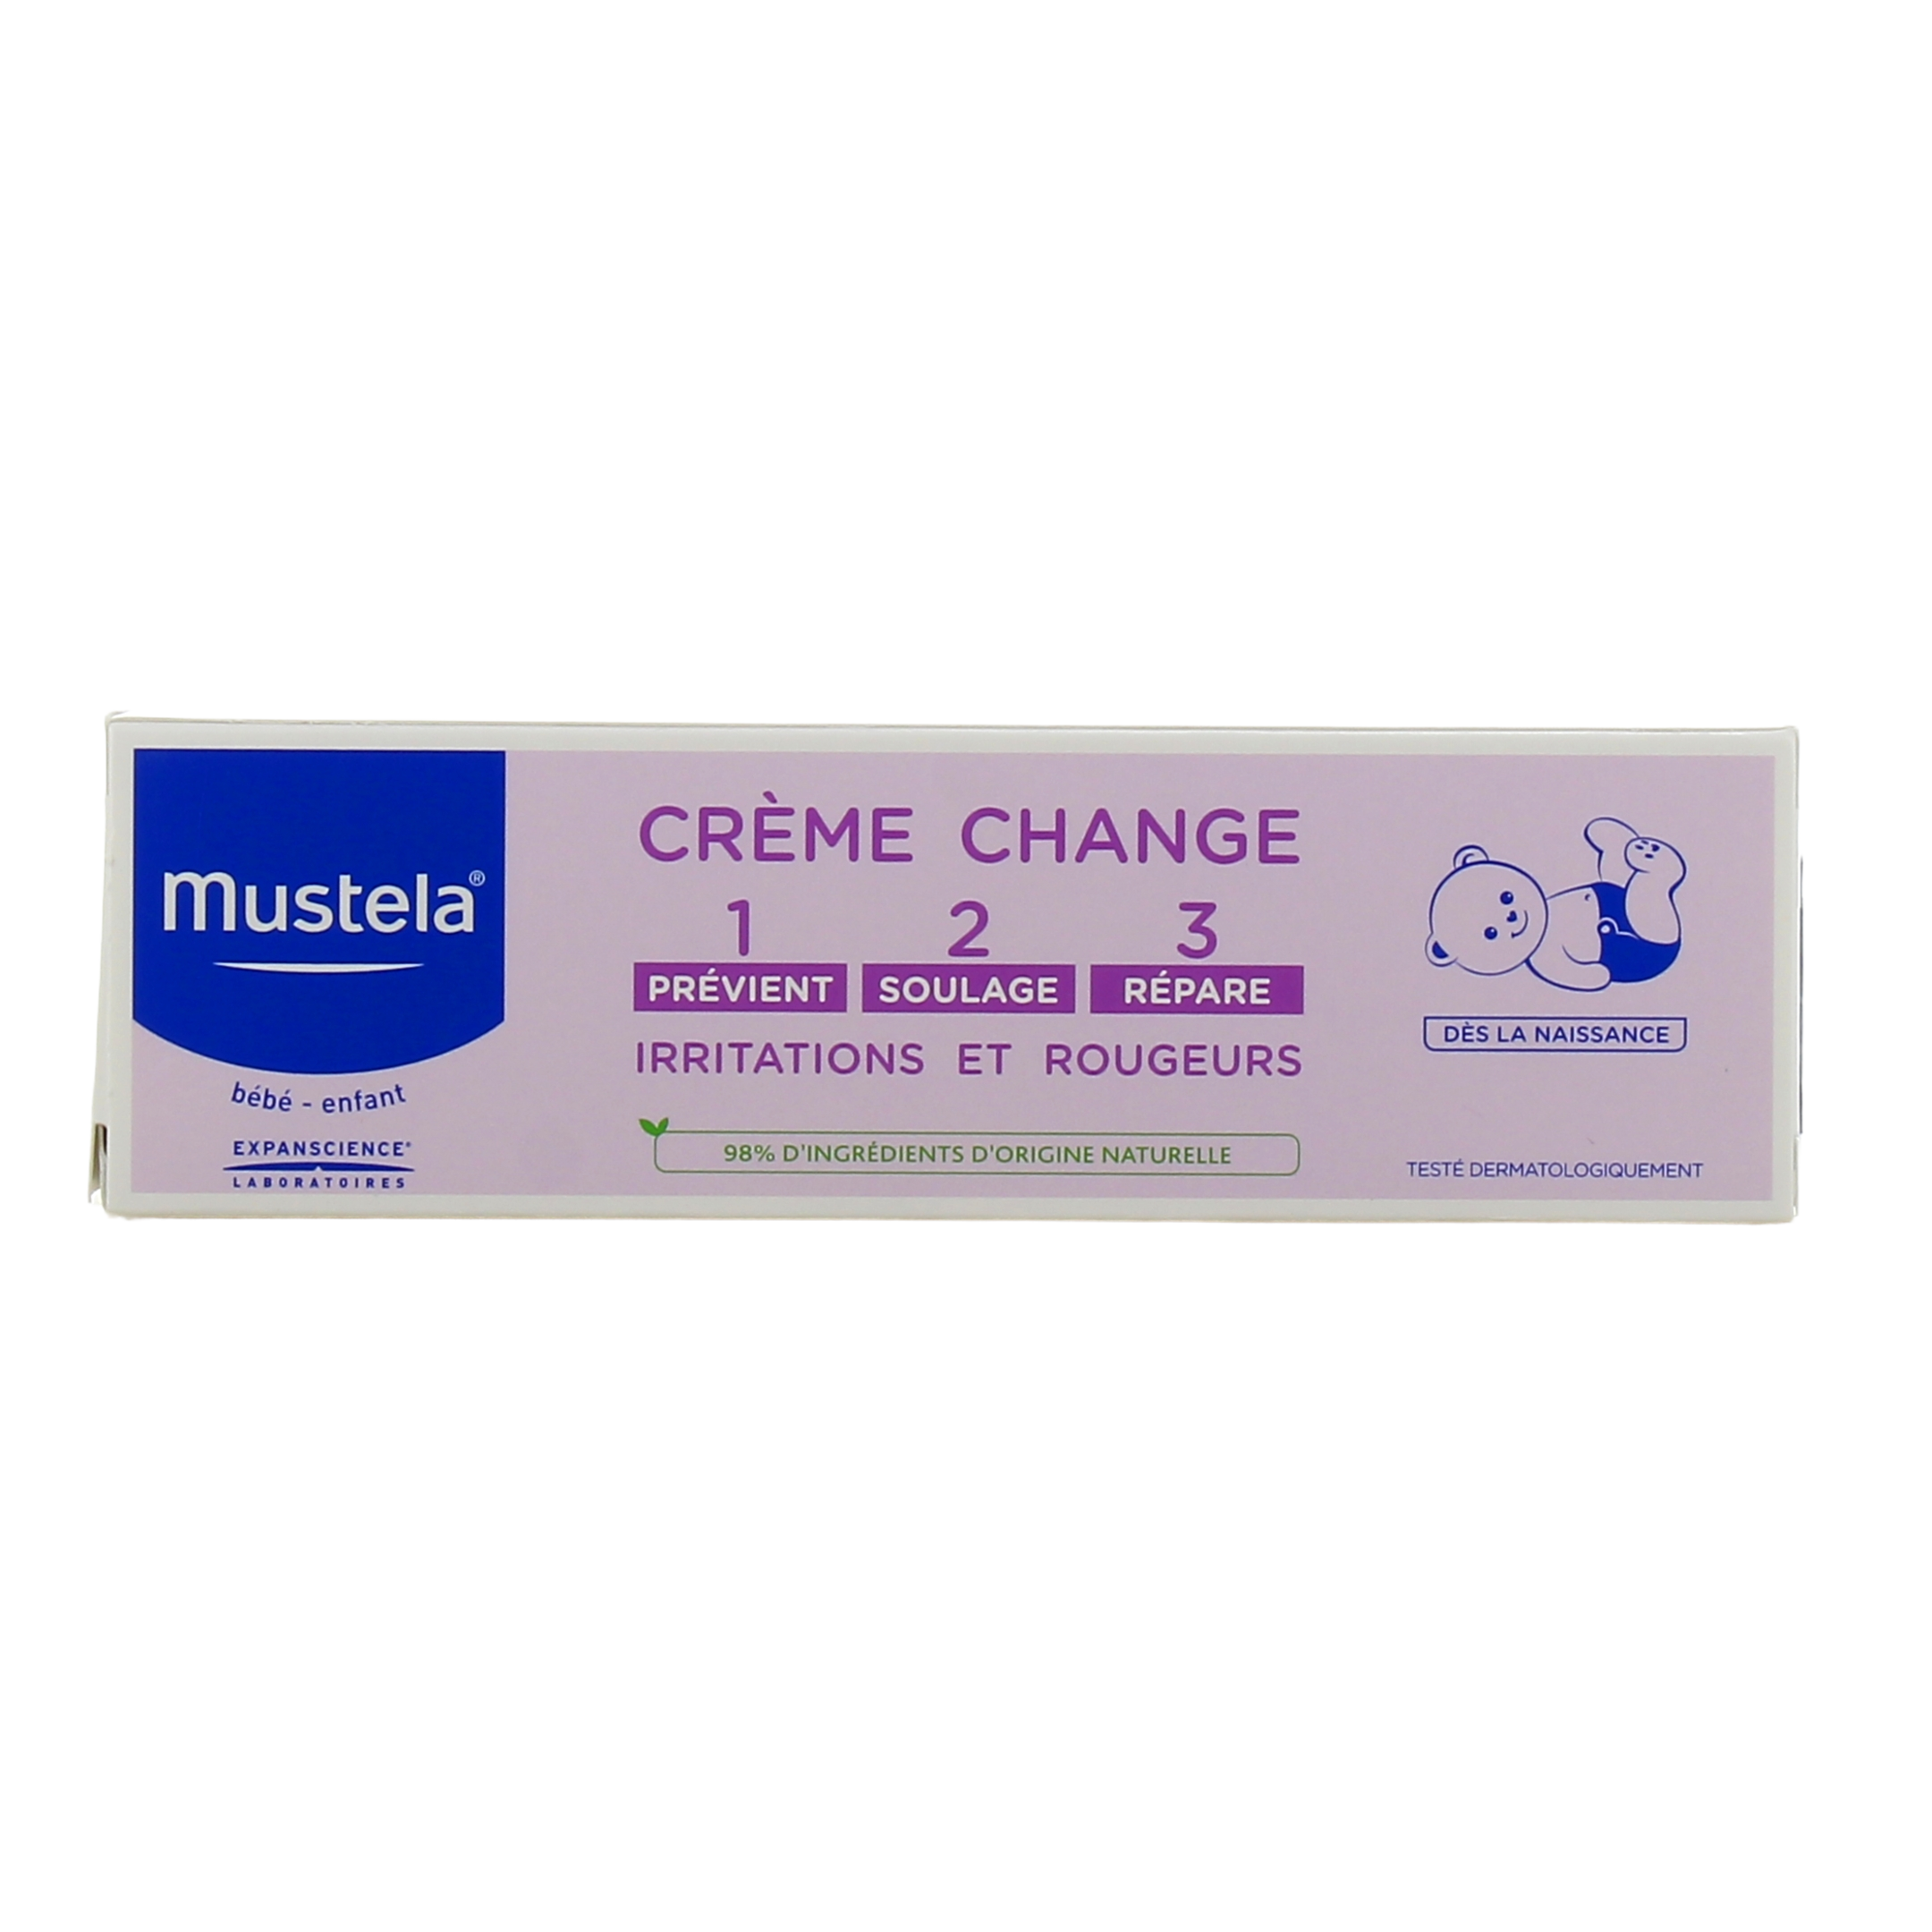 Mitosyl Naturel crème change 3 en 1 - Pharmacie des Drakkars